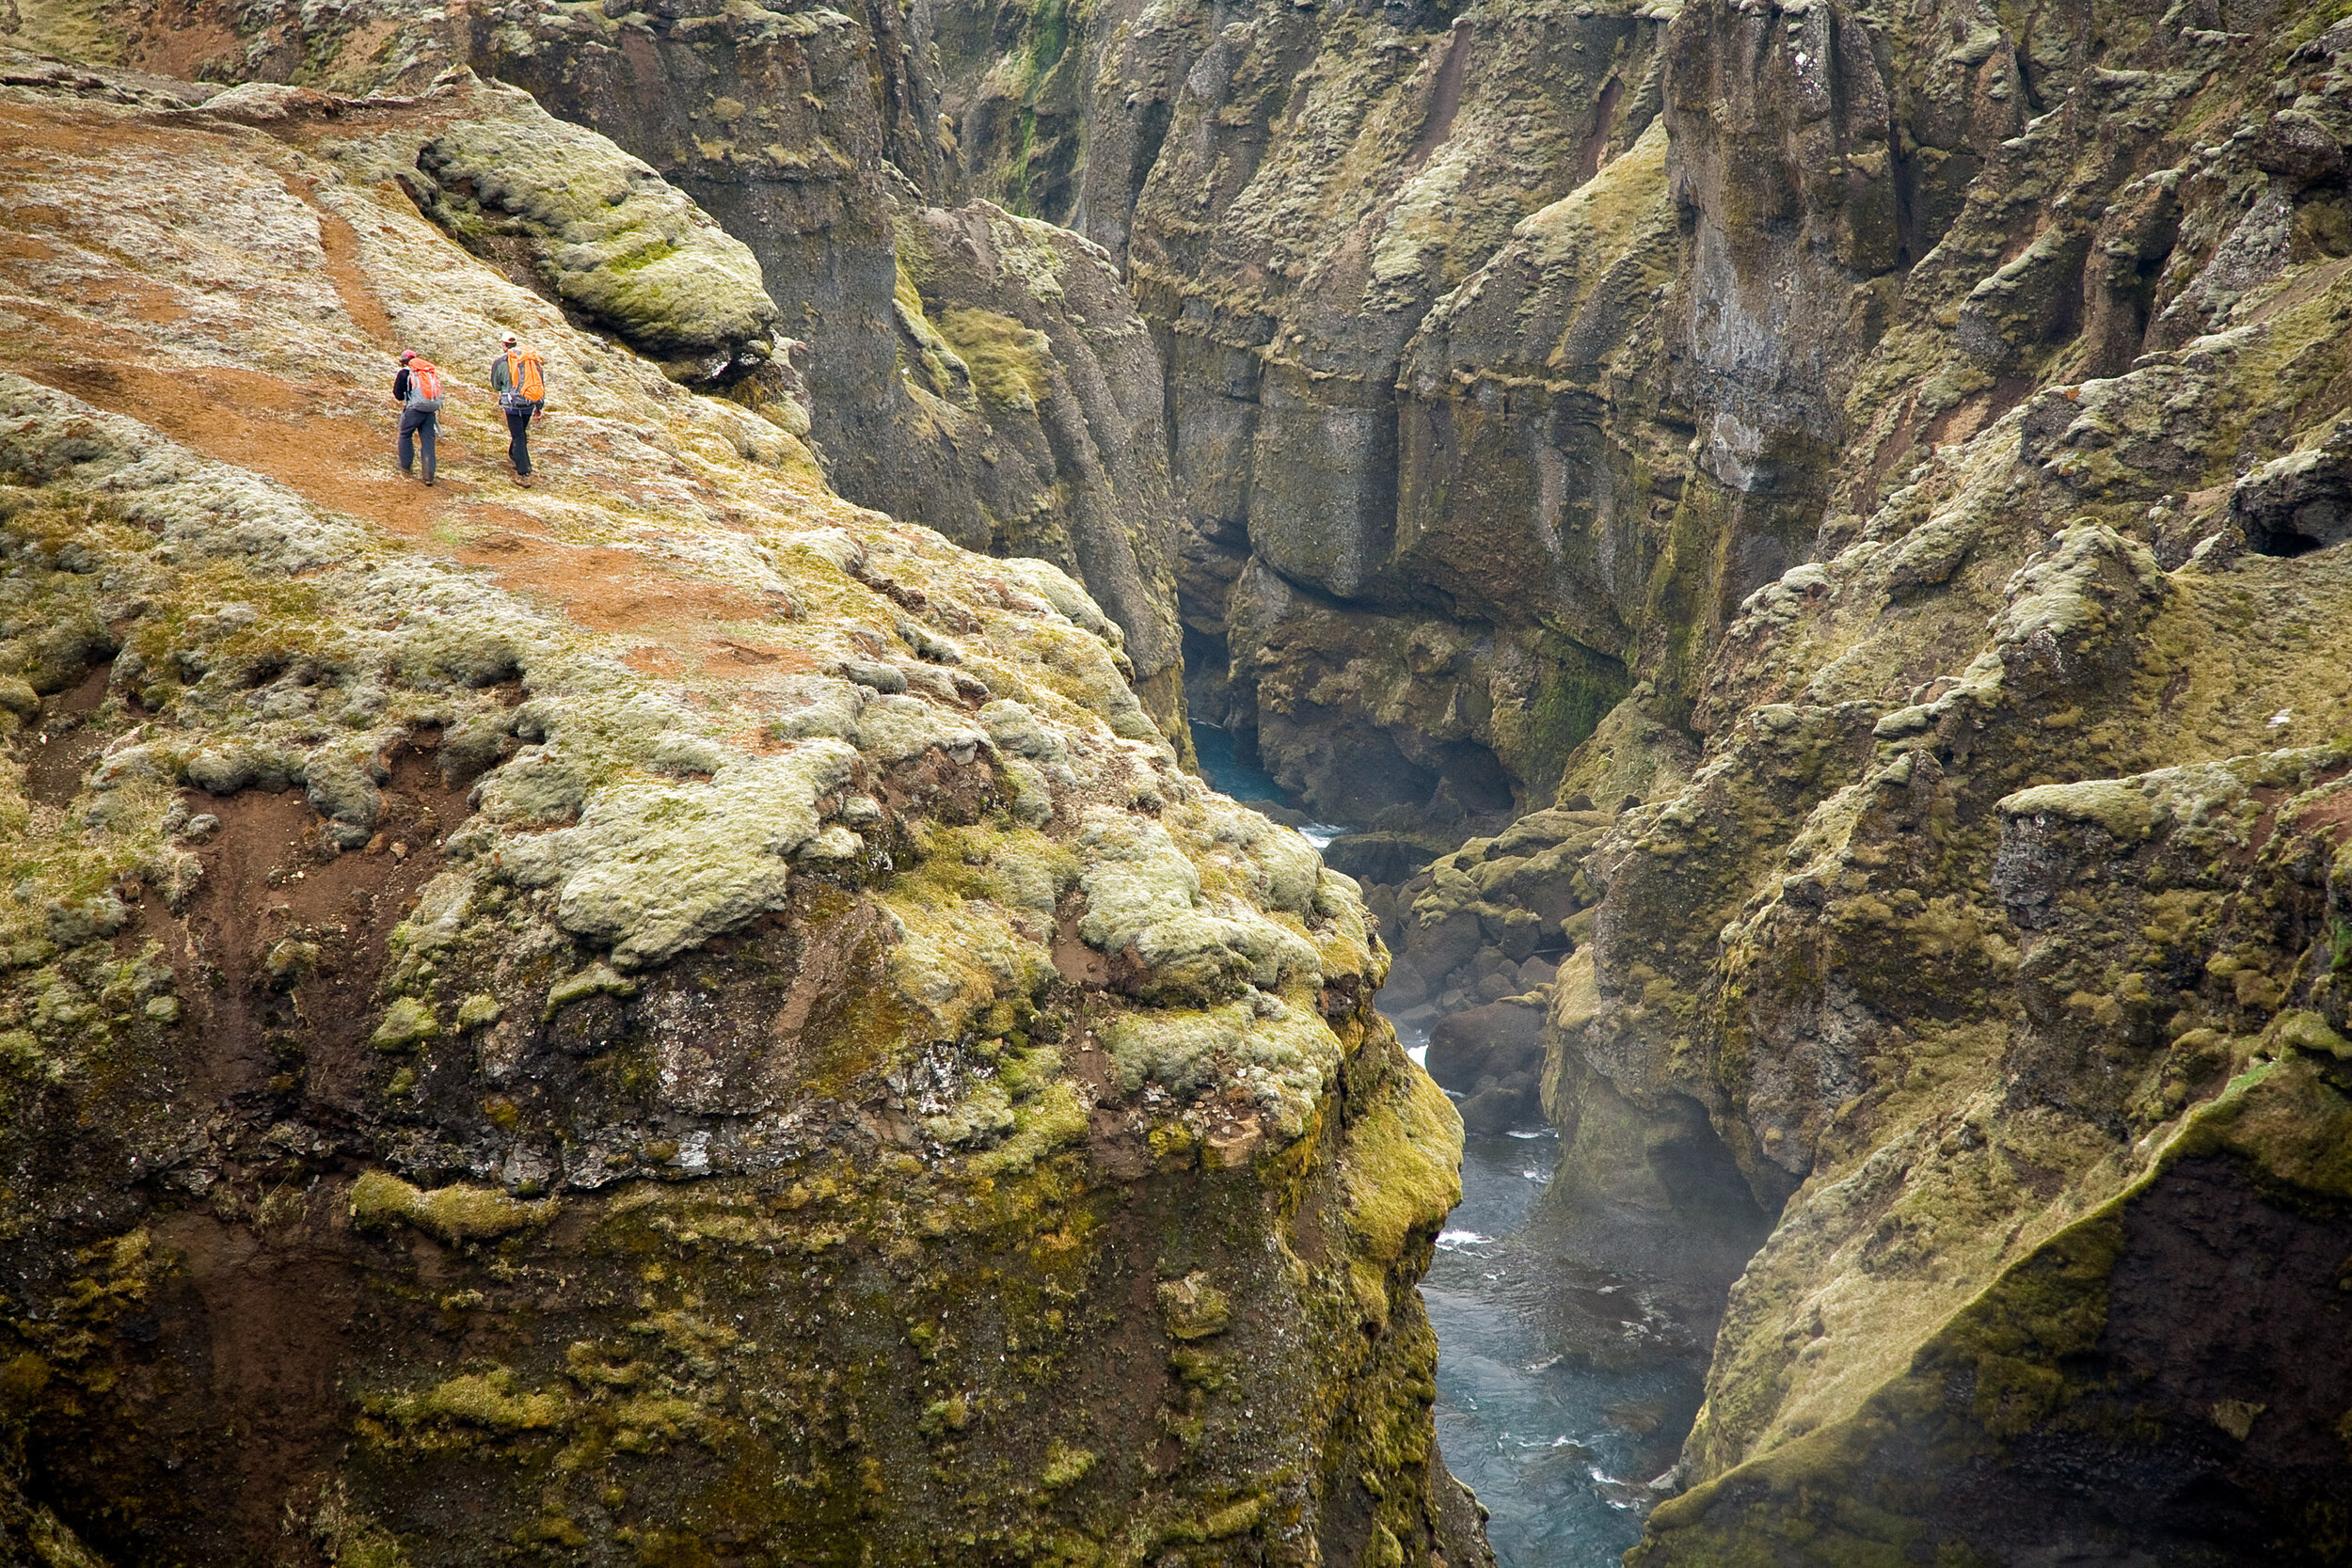  Adventure: Hikers take in the views of a deep gorge, Skogaheidi, Iceland 